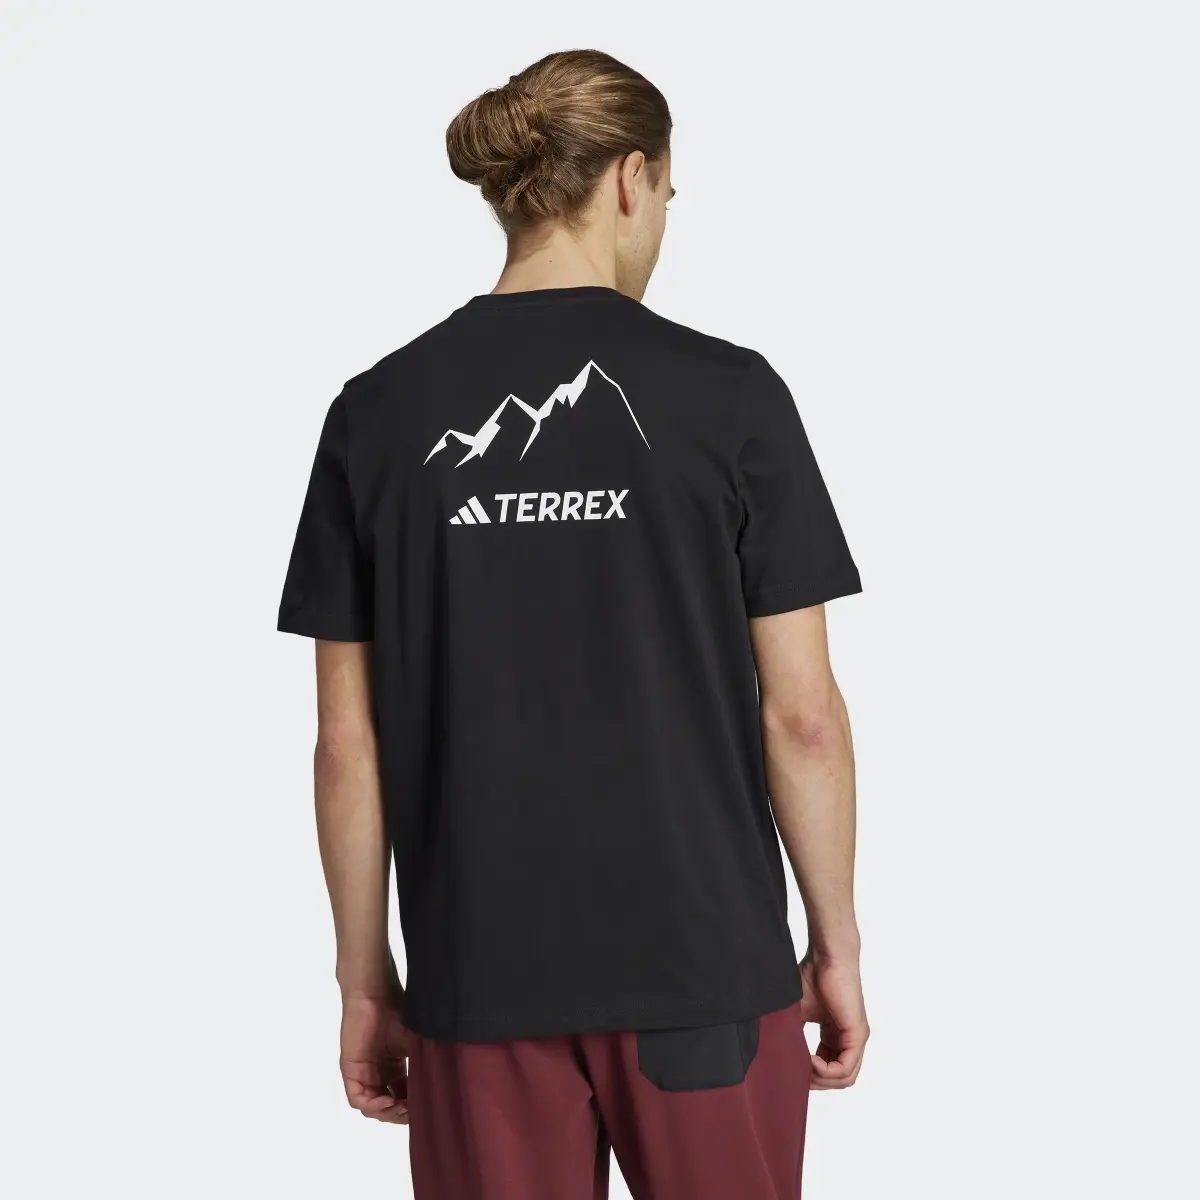 Adidas T-shirt MTN 2.0 TERREX. 3